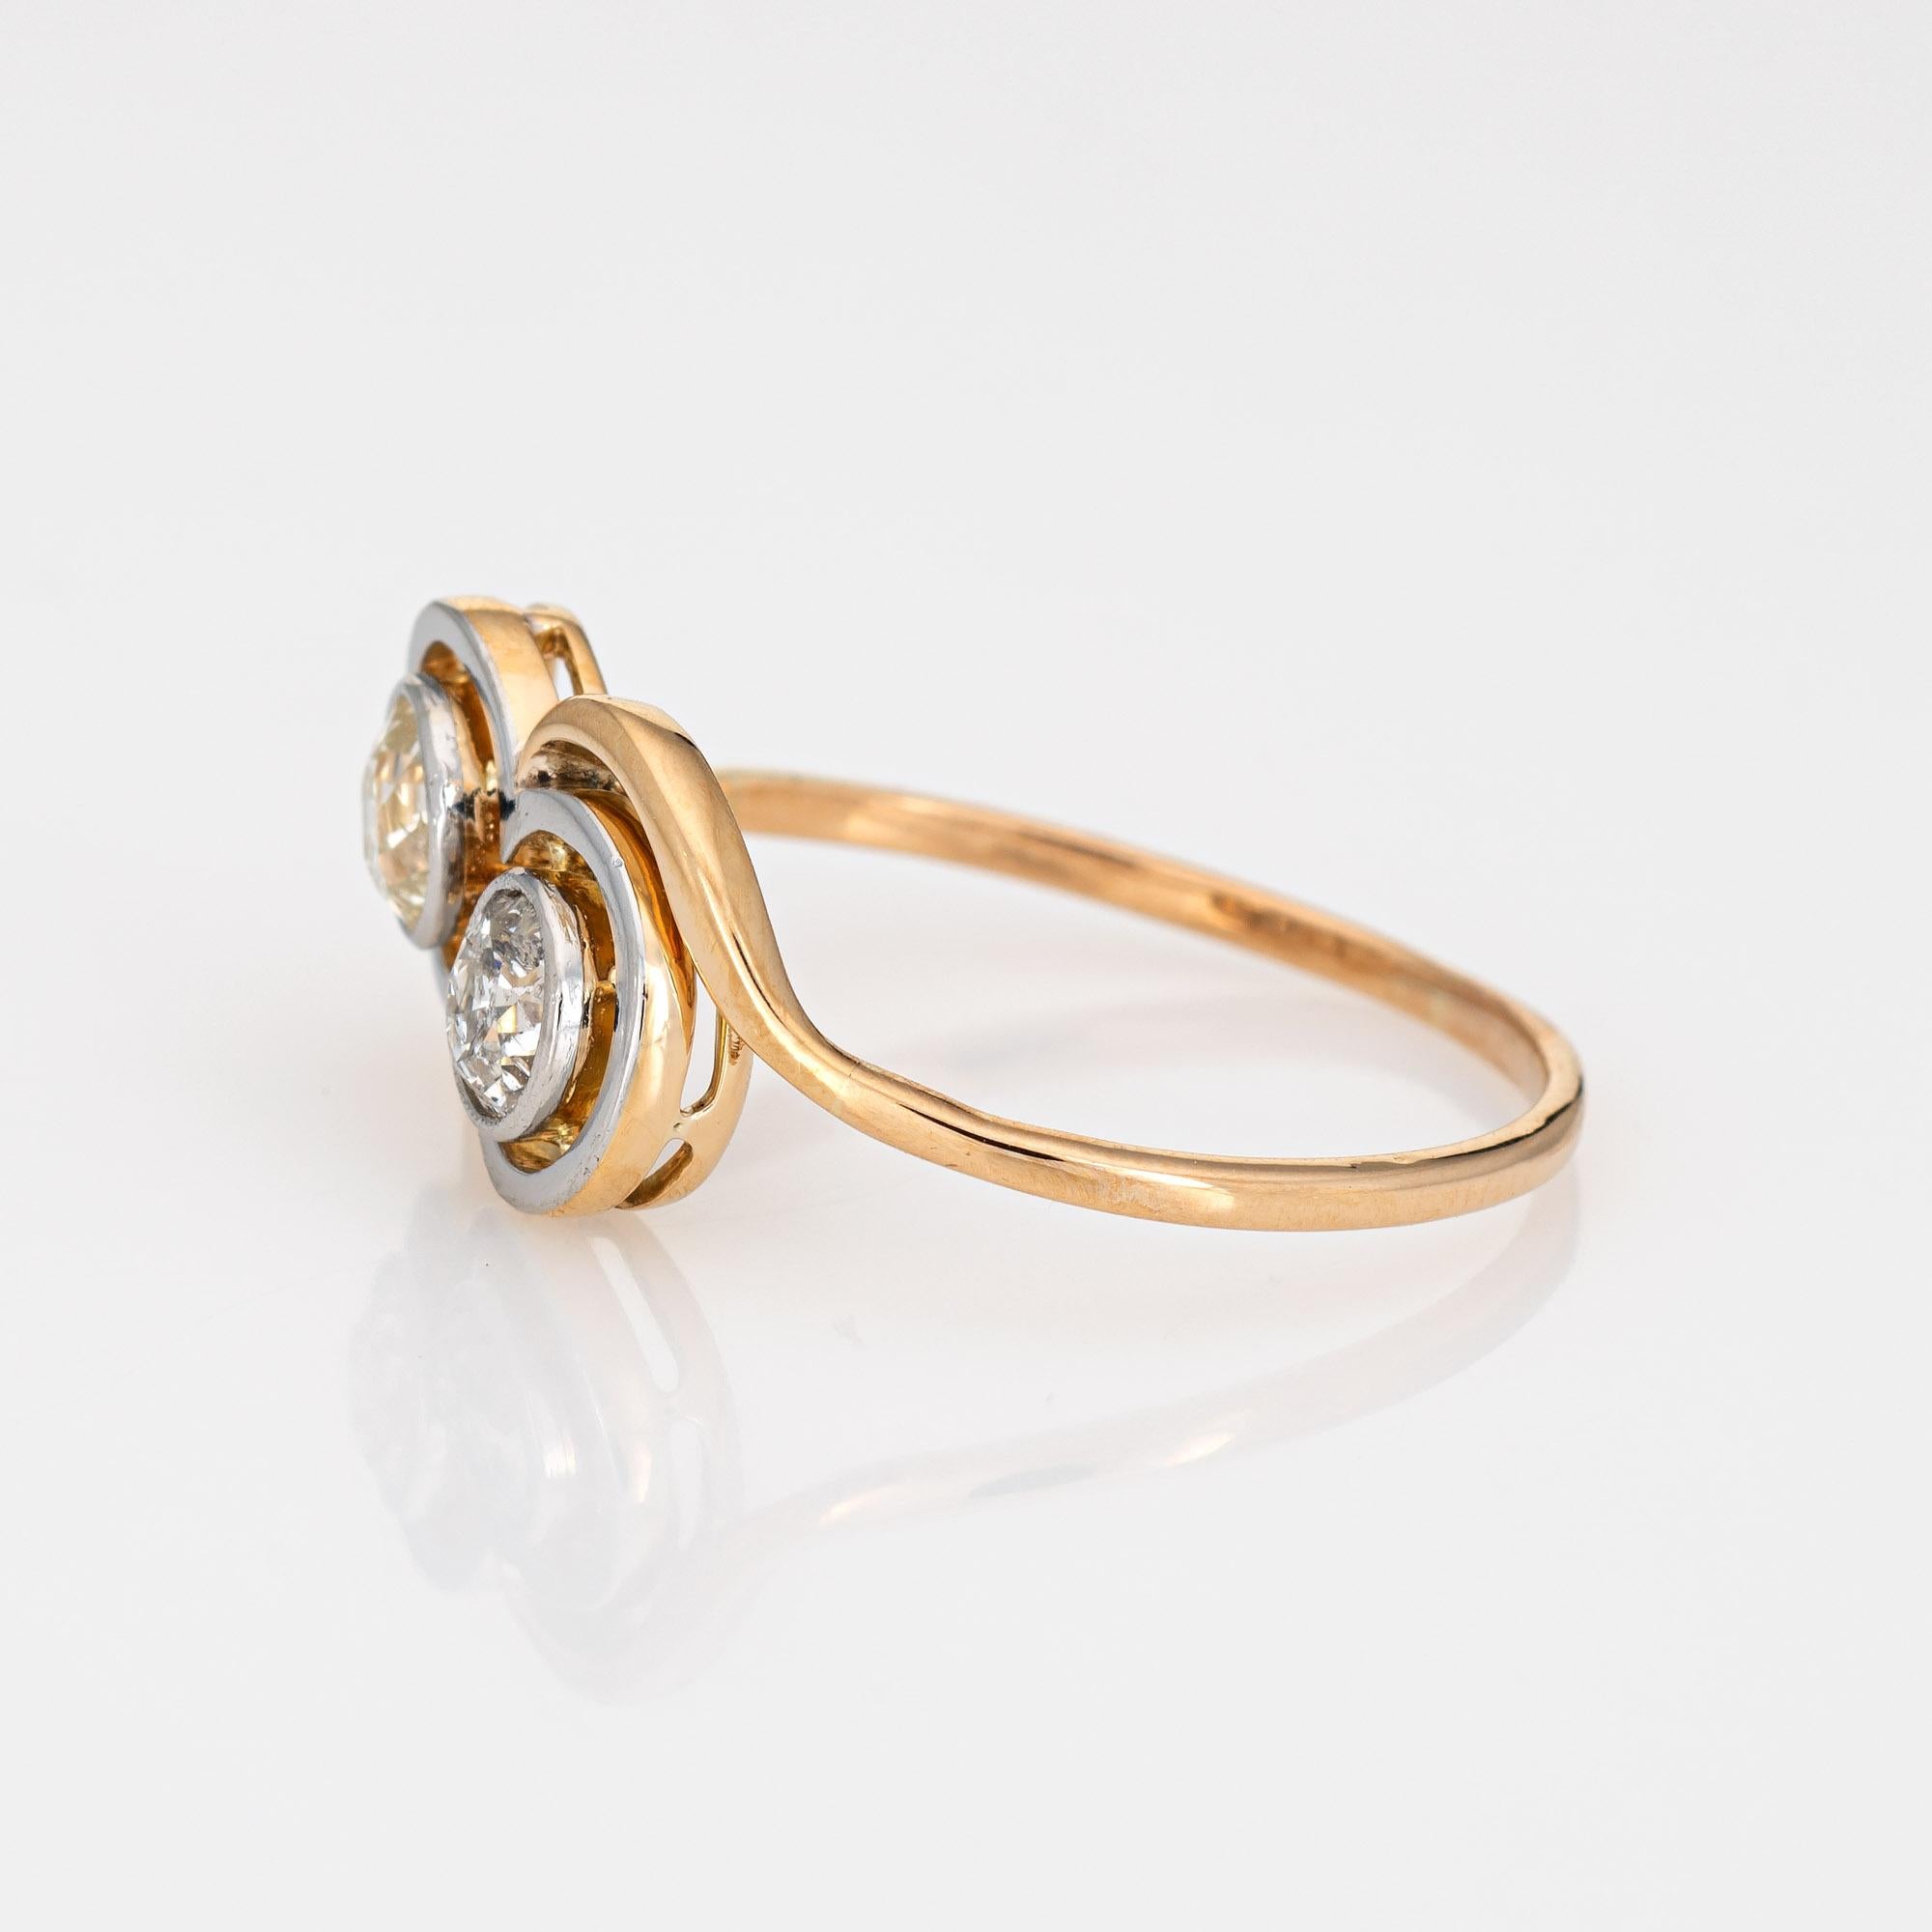 Women's Vintage Art Deco Double Diamond Ring Toi et Moi Old Mine Cuts 14 Karat Gold